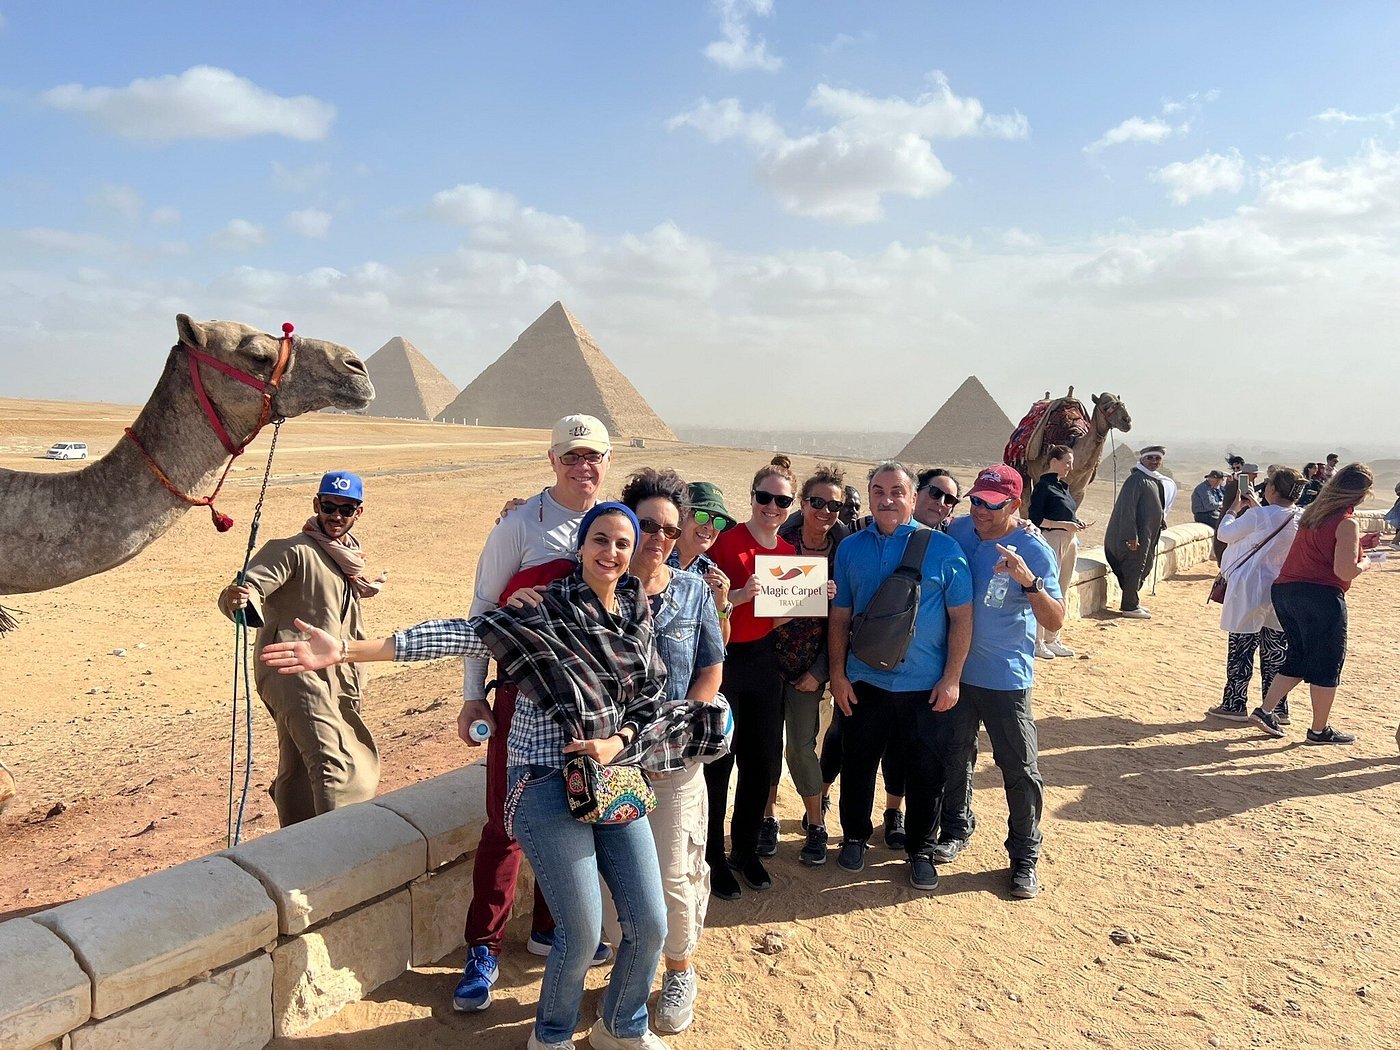 Gizeh in één dag: bezoek aan de piramides van Gizeh, de Sfinx, Saqqara en GEM